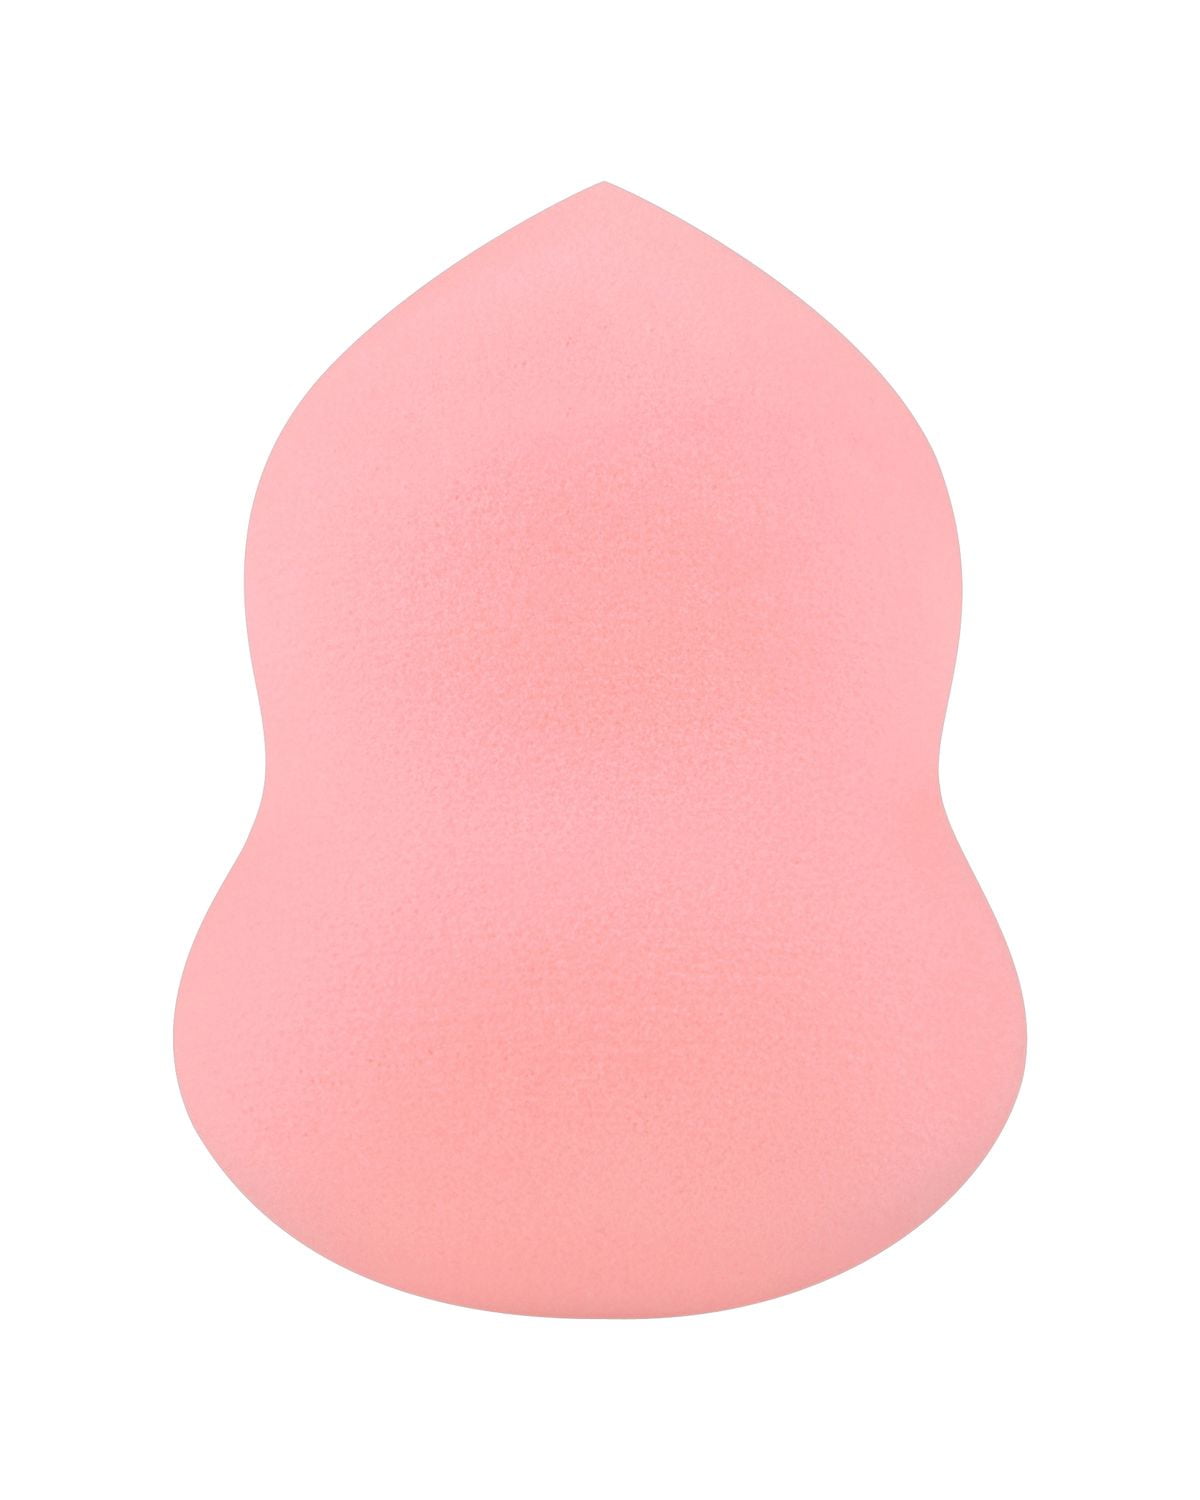 Zodaca Women S Face Foundation Makeup Sponge Puff Flawless Coverage Bottle Shape 2 37 In X 1 58 In Light Pink Walmart Com Walmart Com